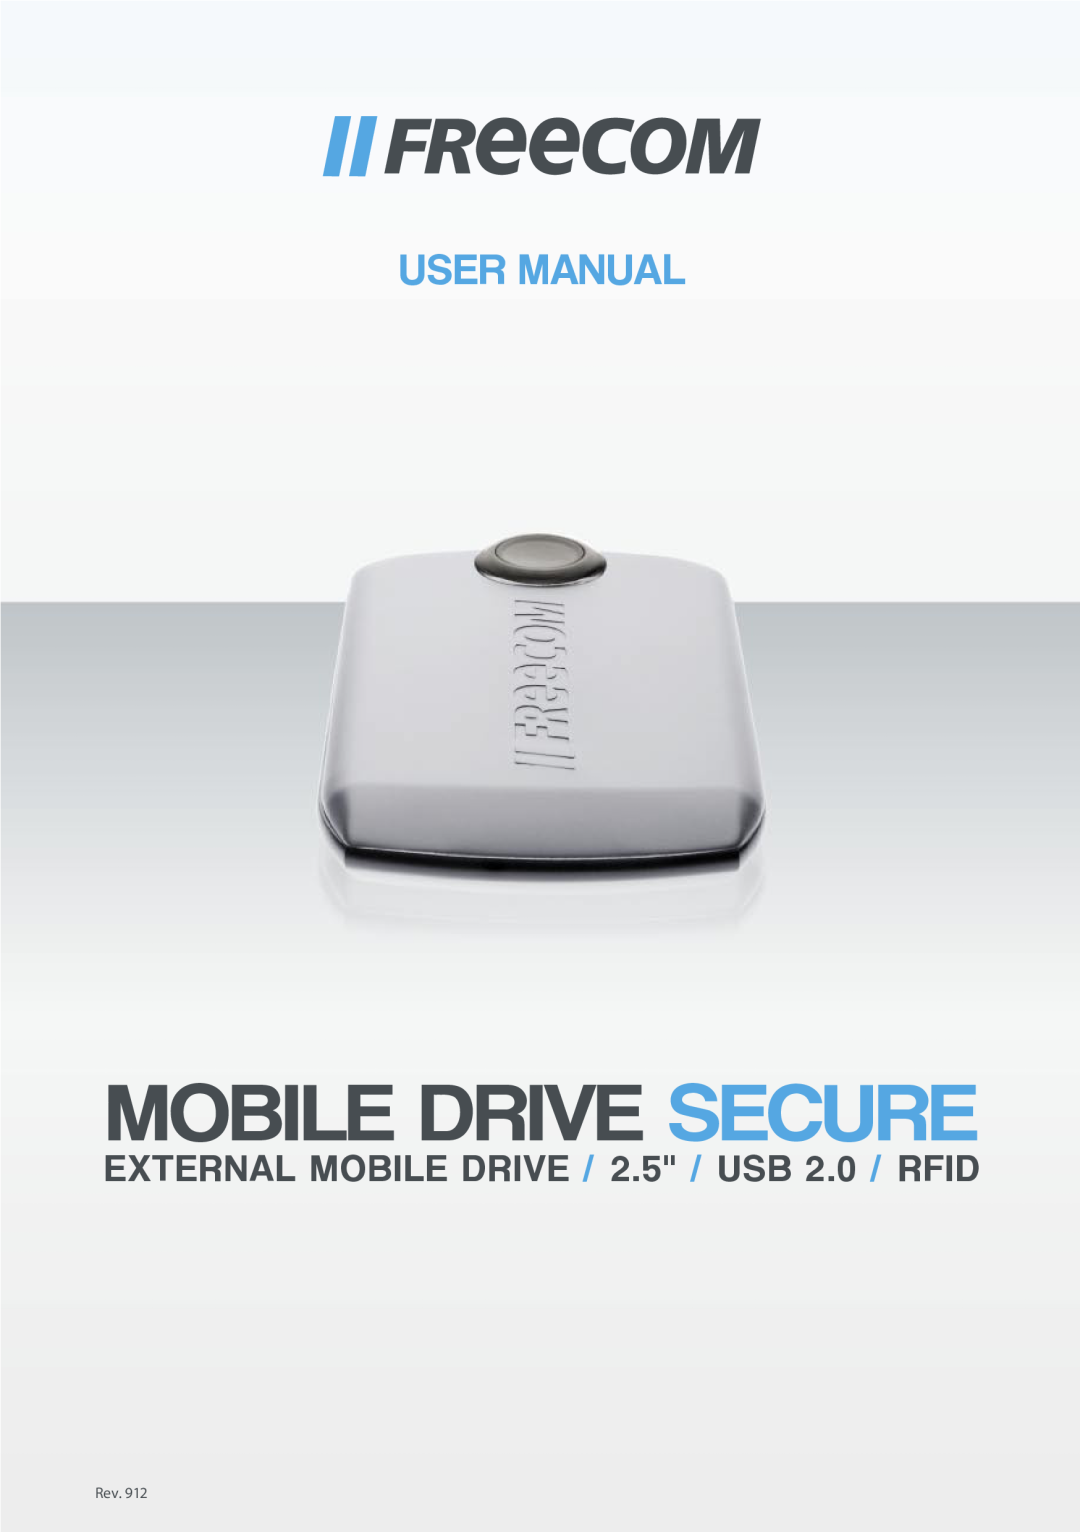 Freecom Technologies Mobile Drive Secure user manual User Manual, EXTERNAL MOBILE DRIVE / 2.5 / USB 2.0 / RFID 